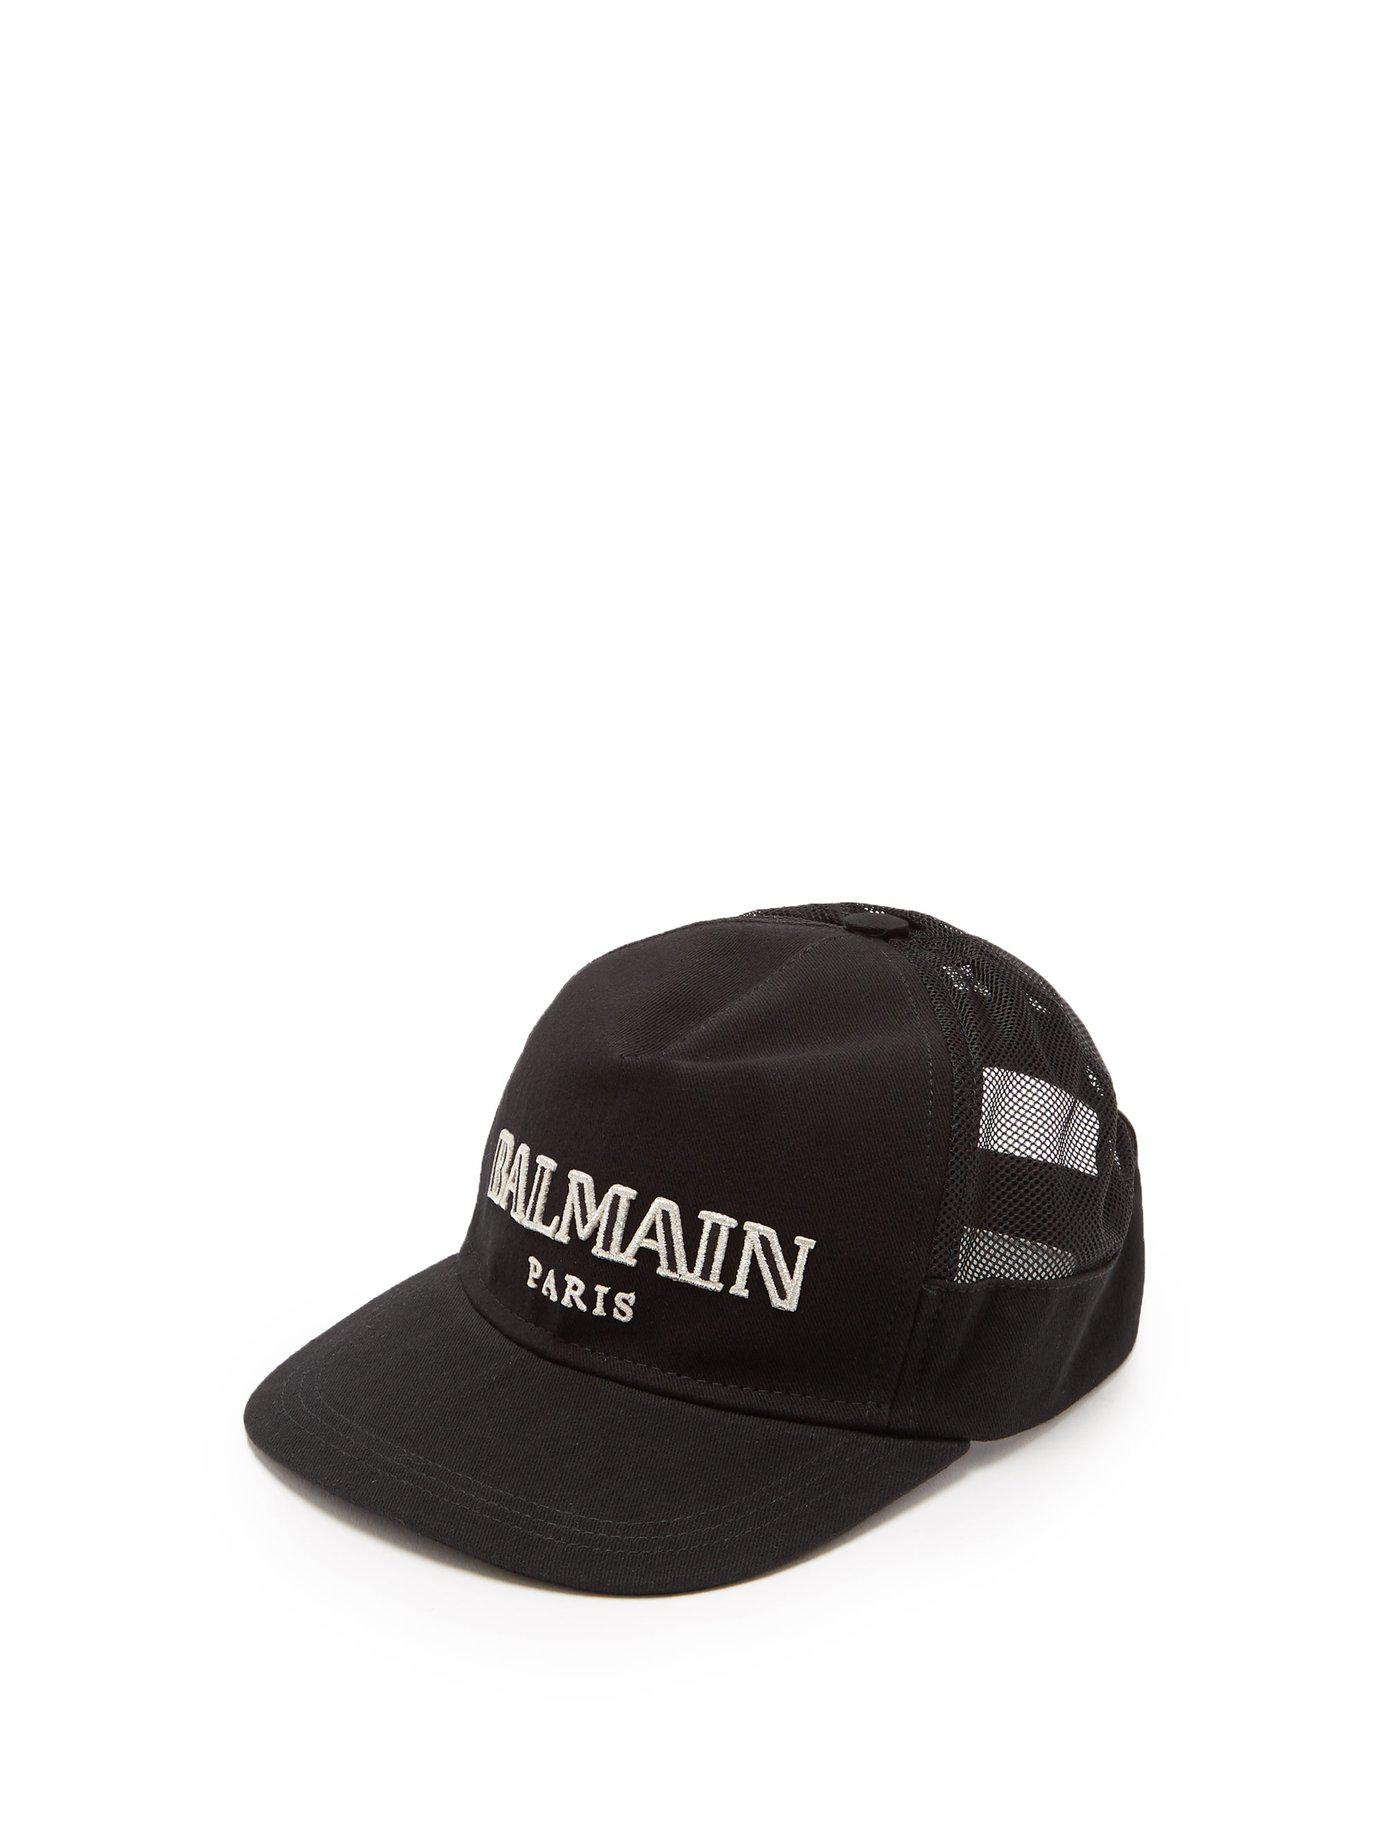 Balmain Cotton Hat in Black for Men - Lyst